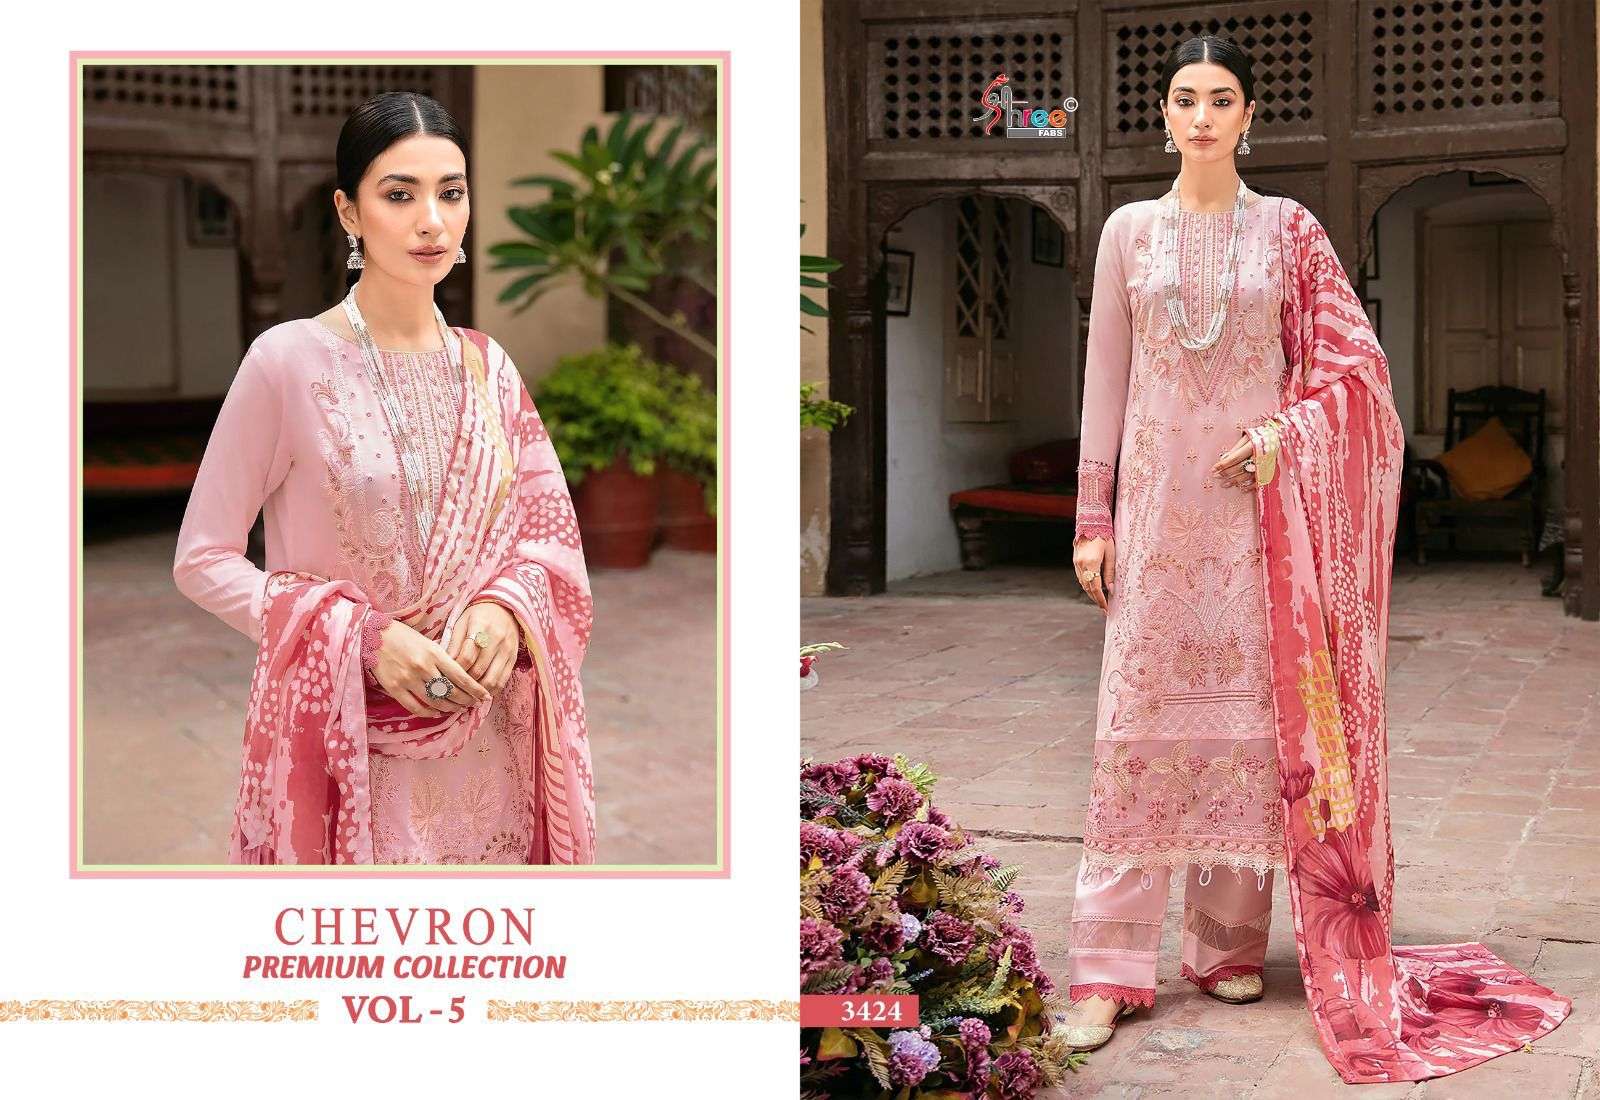 Shree Chevron Premium Vol 5 Chiffon Duppatta Pakistani Suit Wholesale catalog